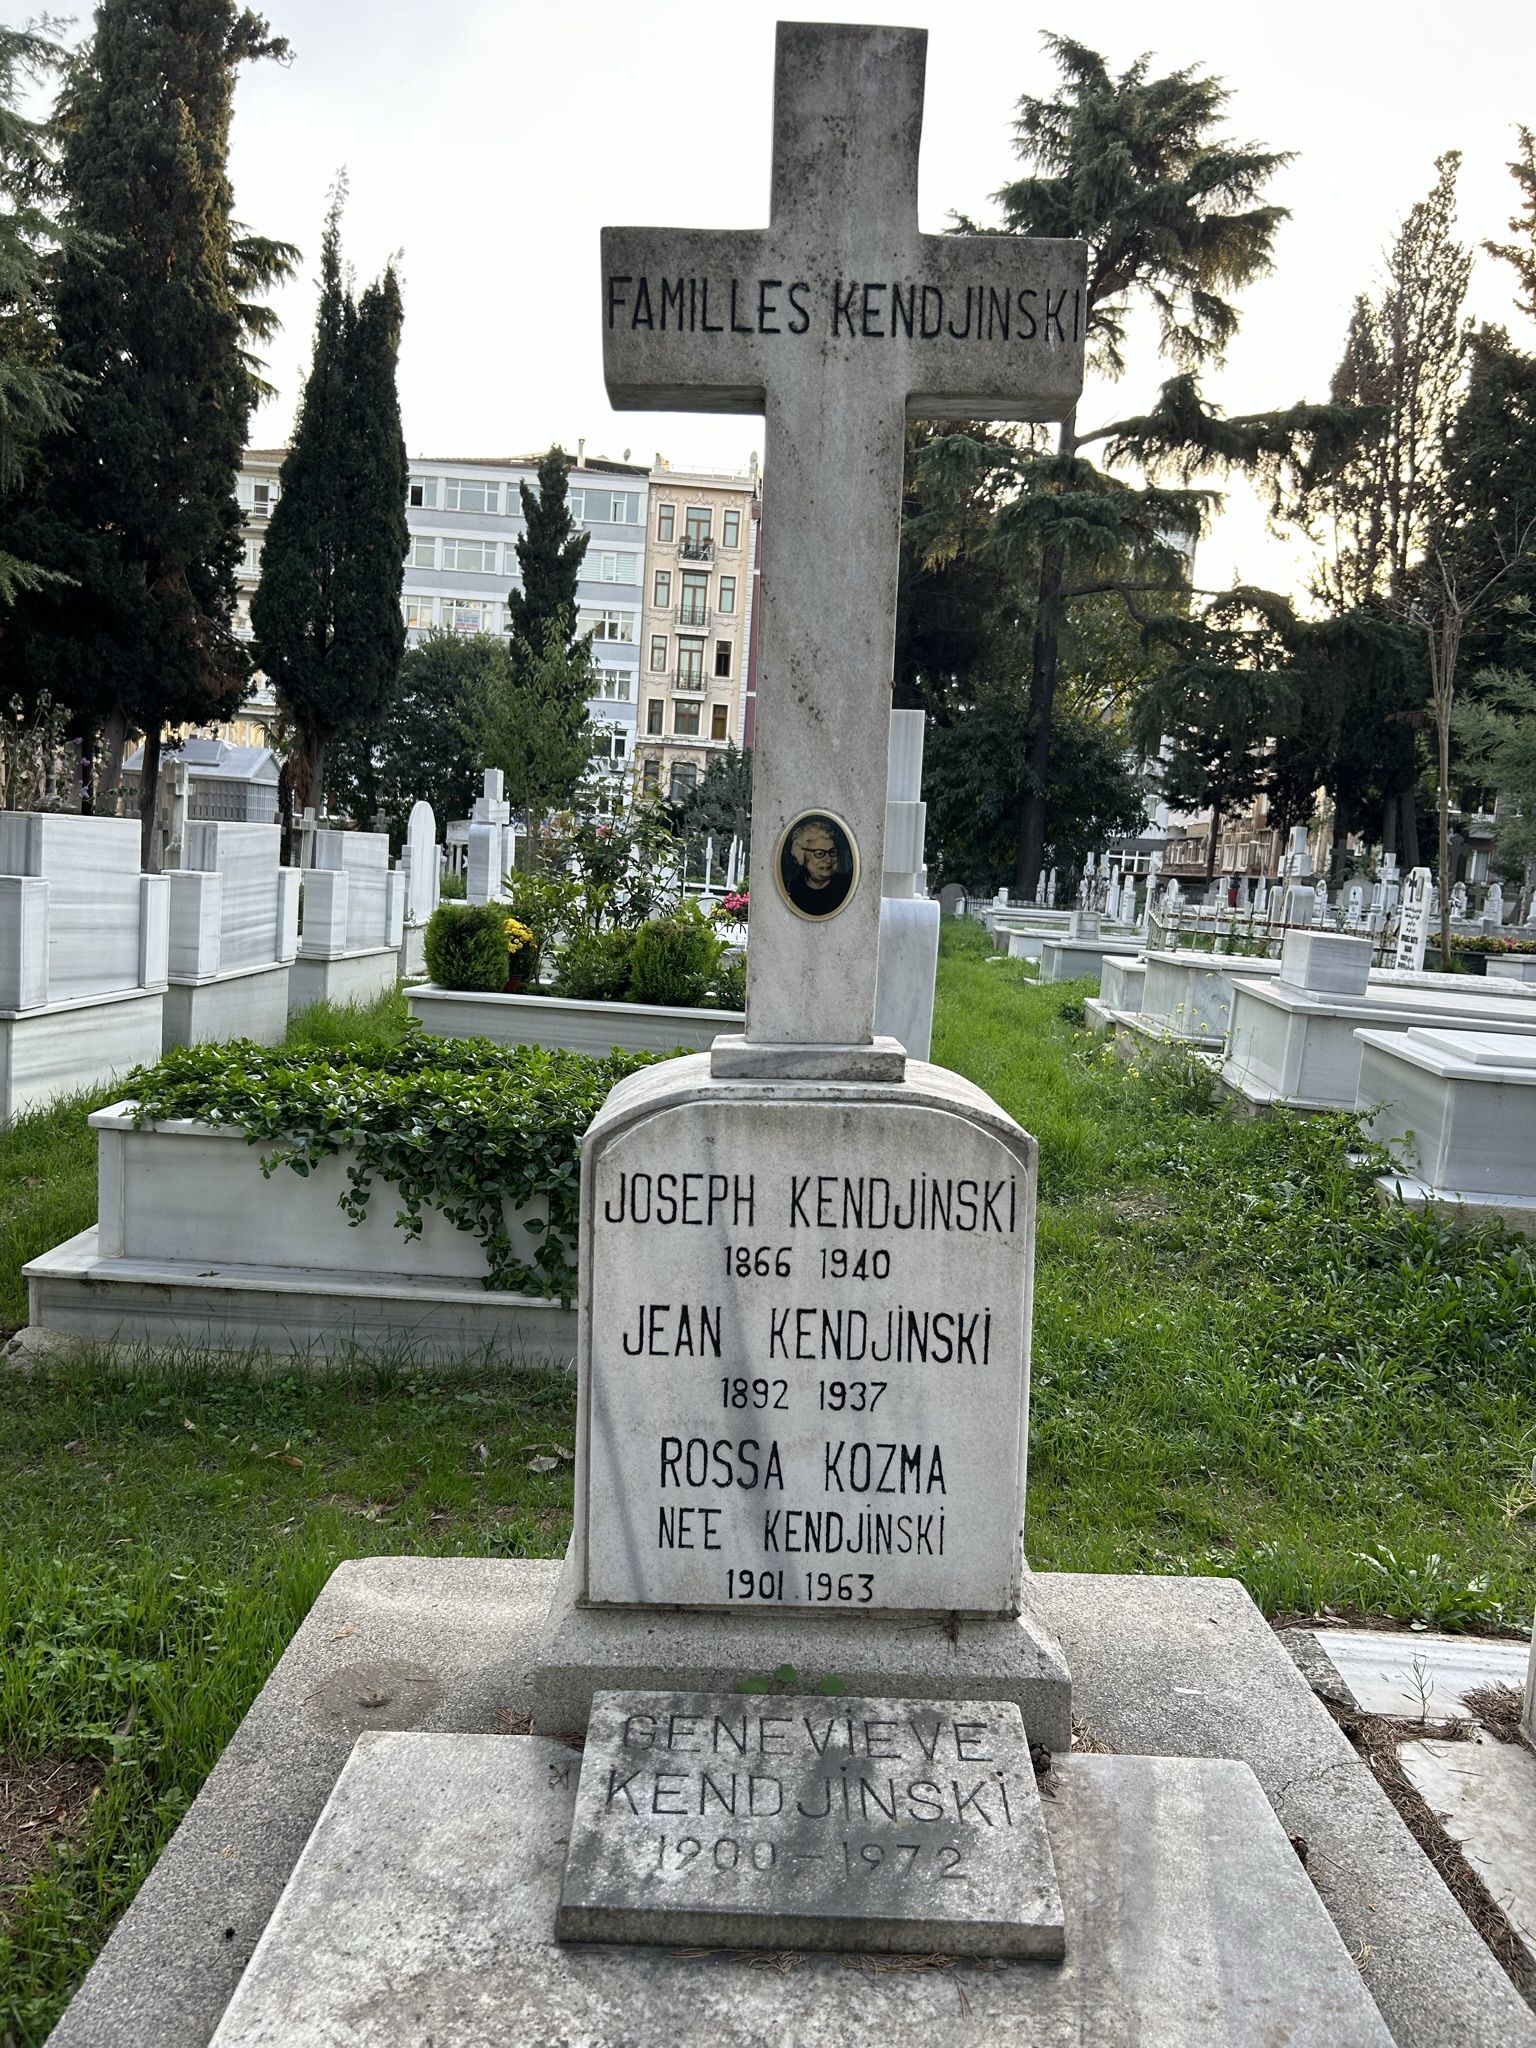 Tombstone of the Kendjinski family, Catholic cemetery in Feriköy